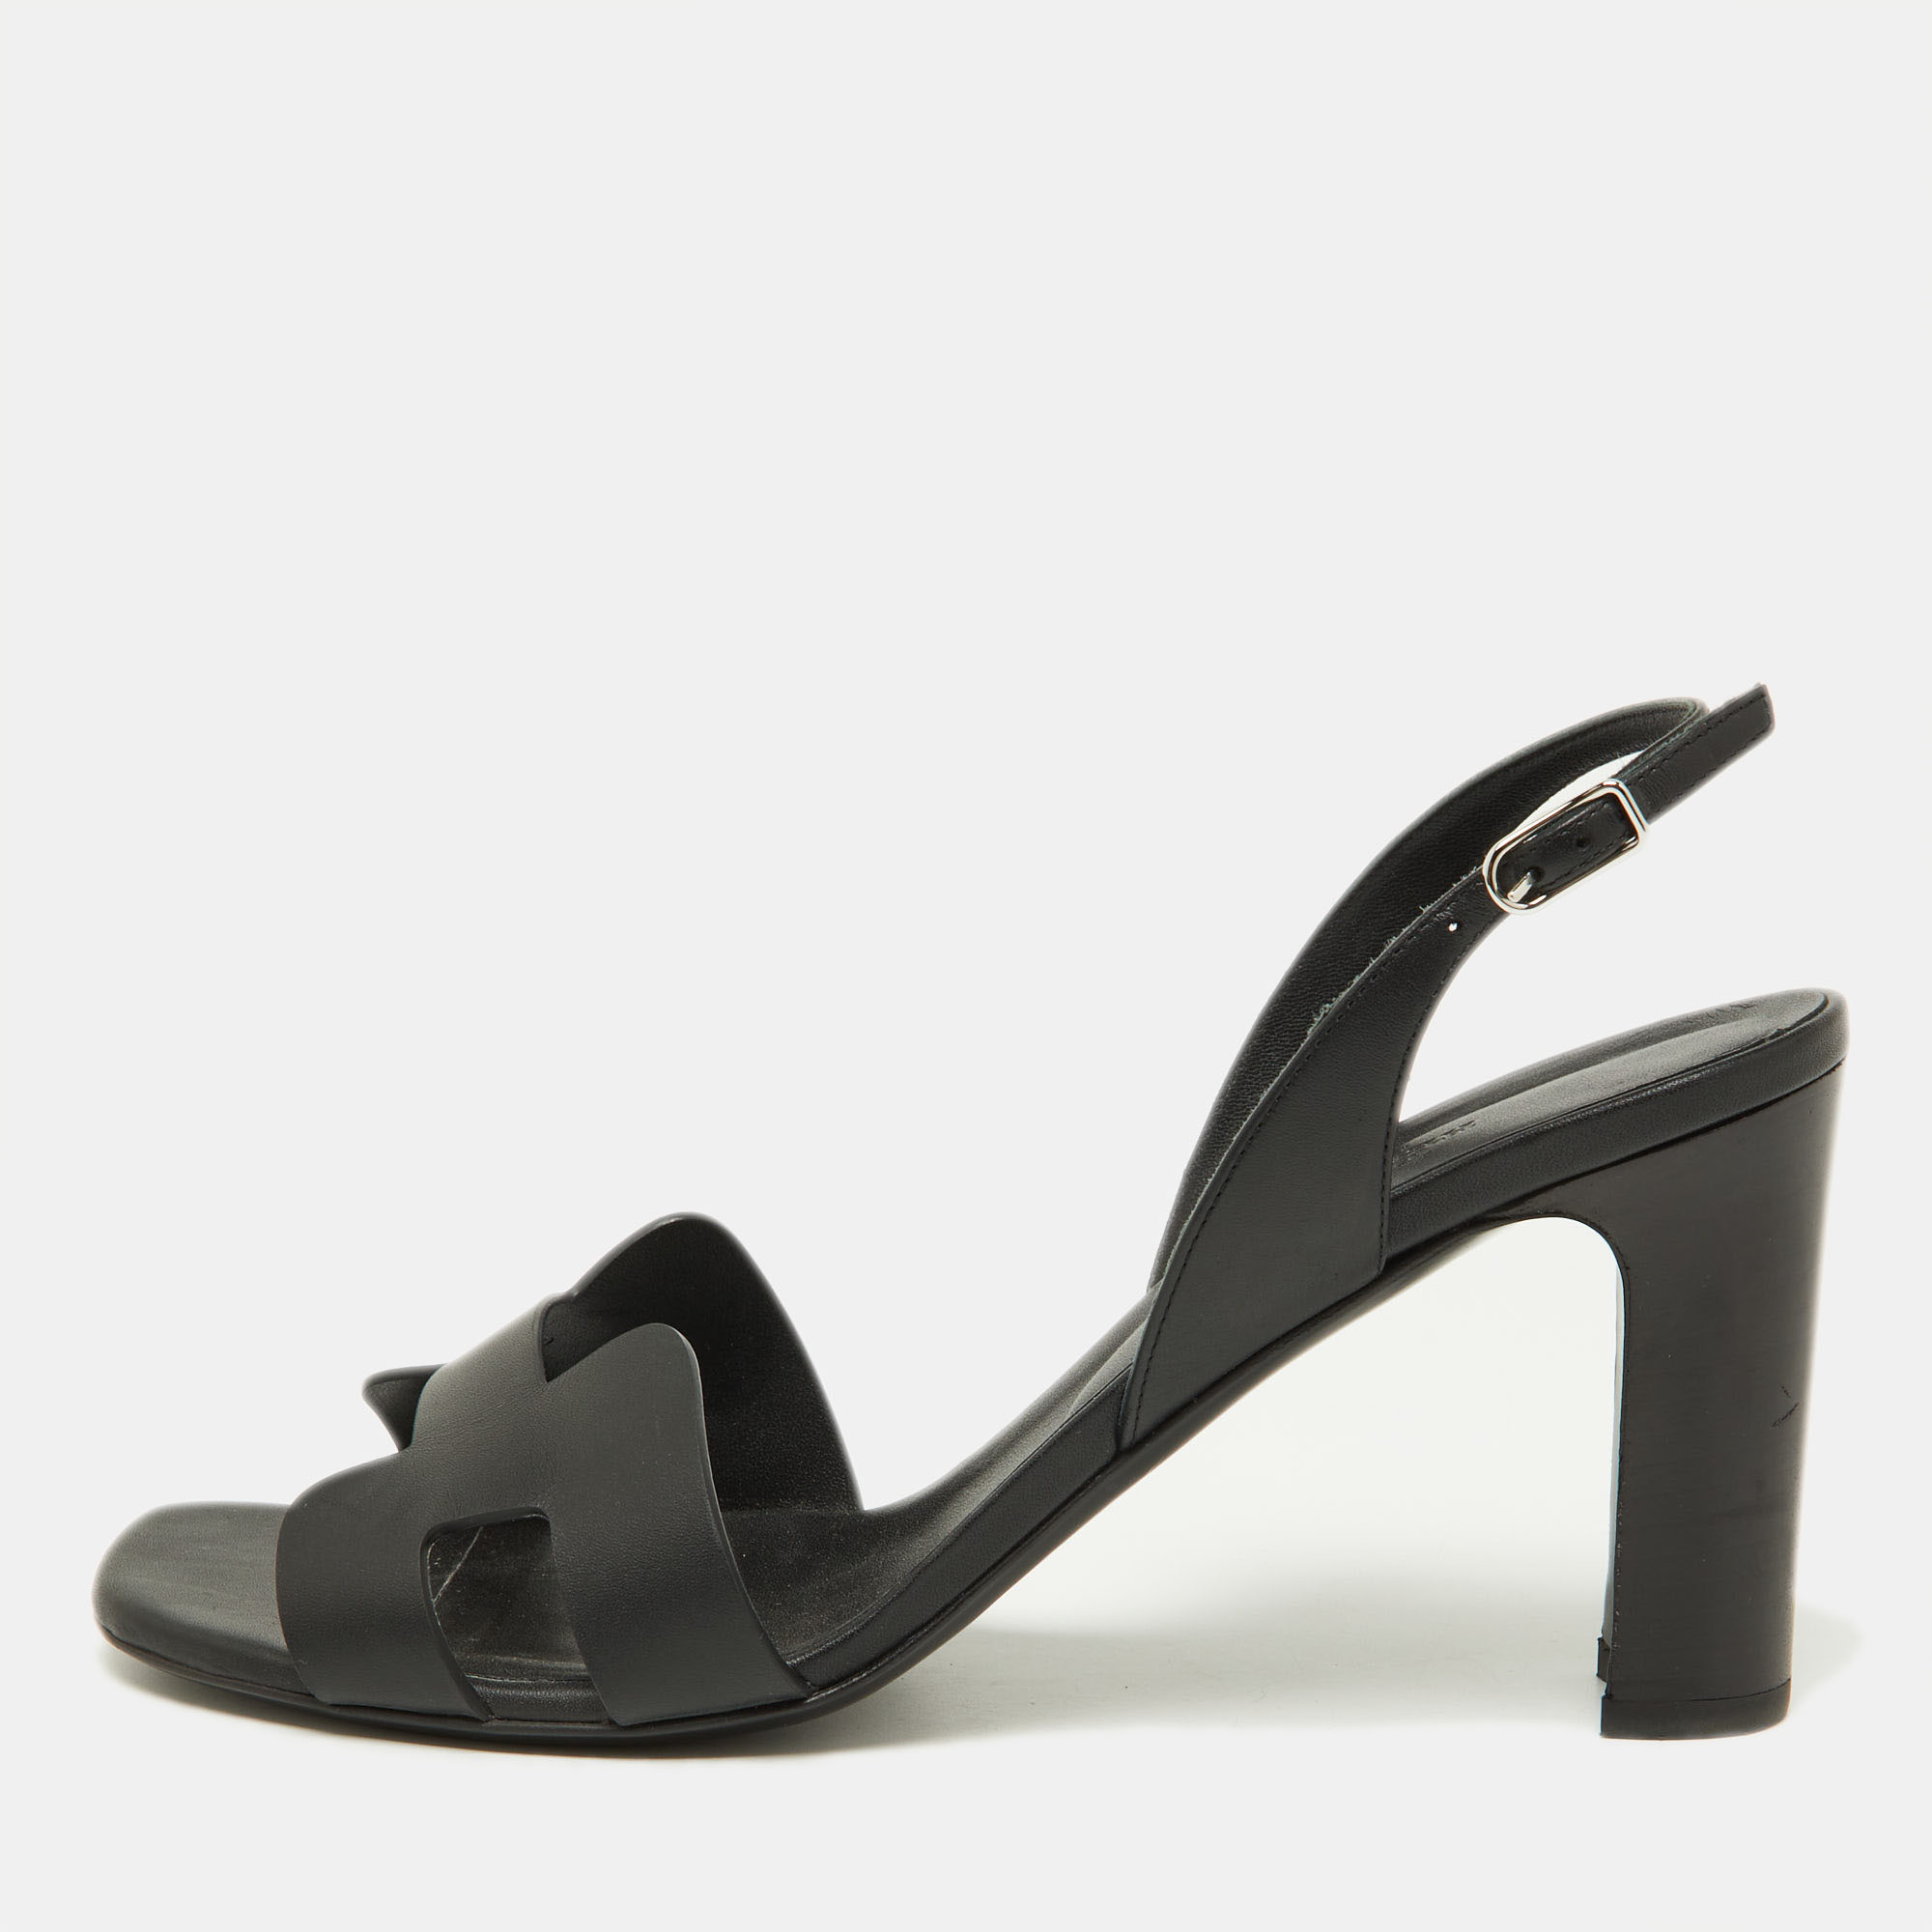 Hermes black leather night slingback sandals size 39.5